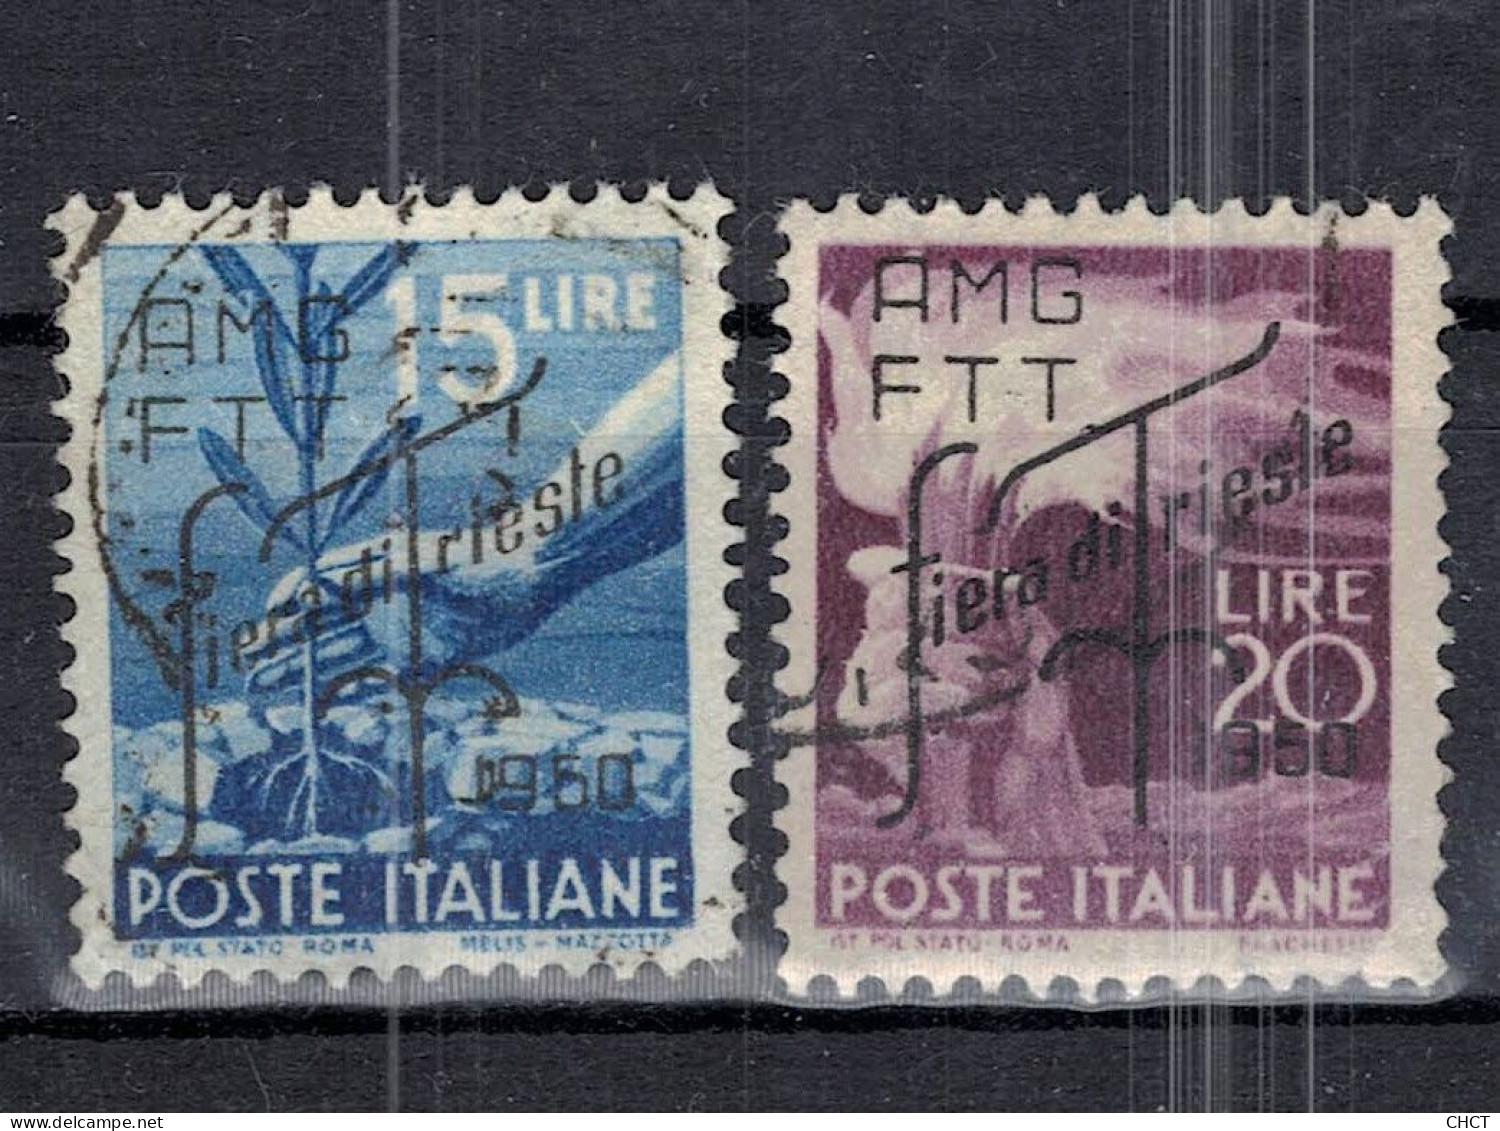 CHCT74 - Motives, AMG-FTT Overprint, Trieste A, 1950, Complete Series, Italy - Oblitérés